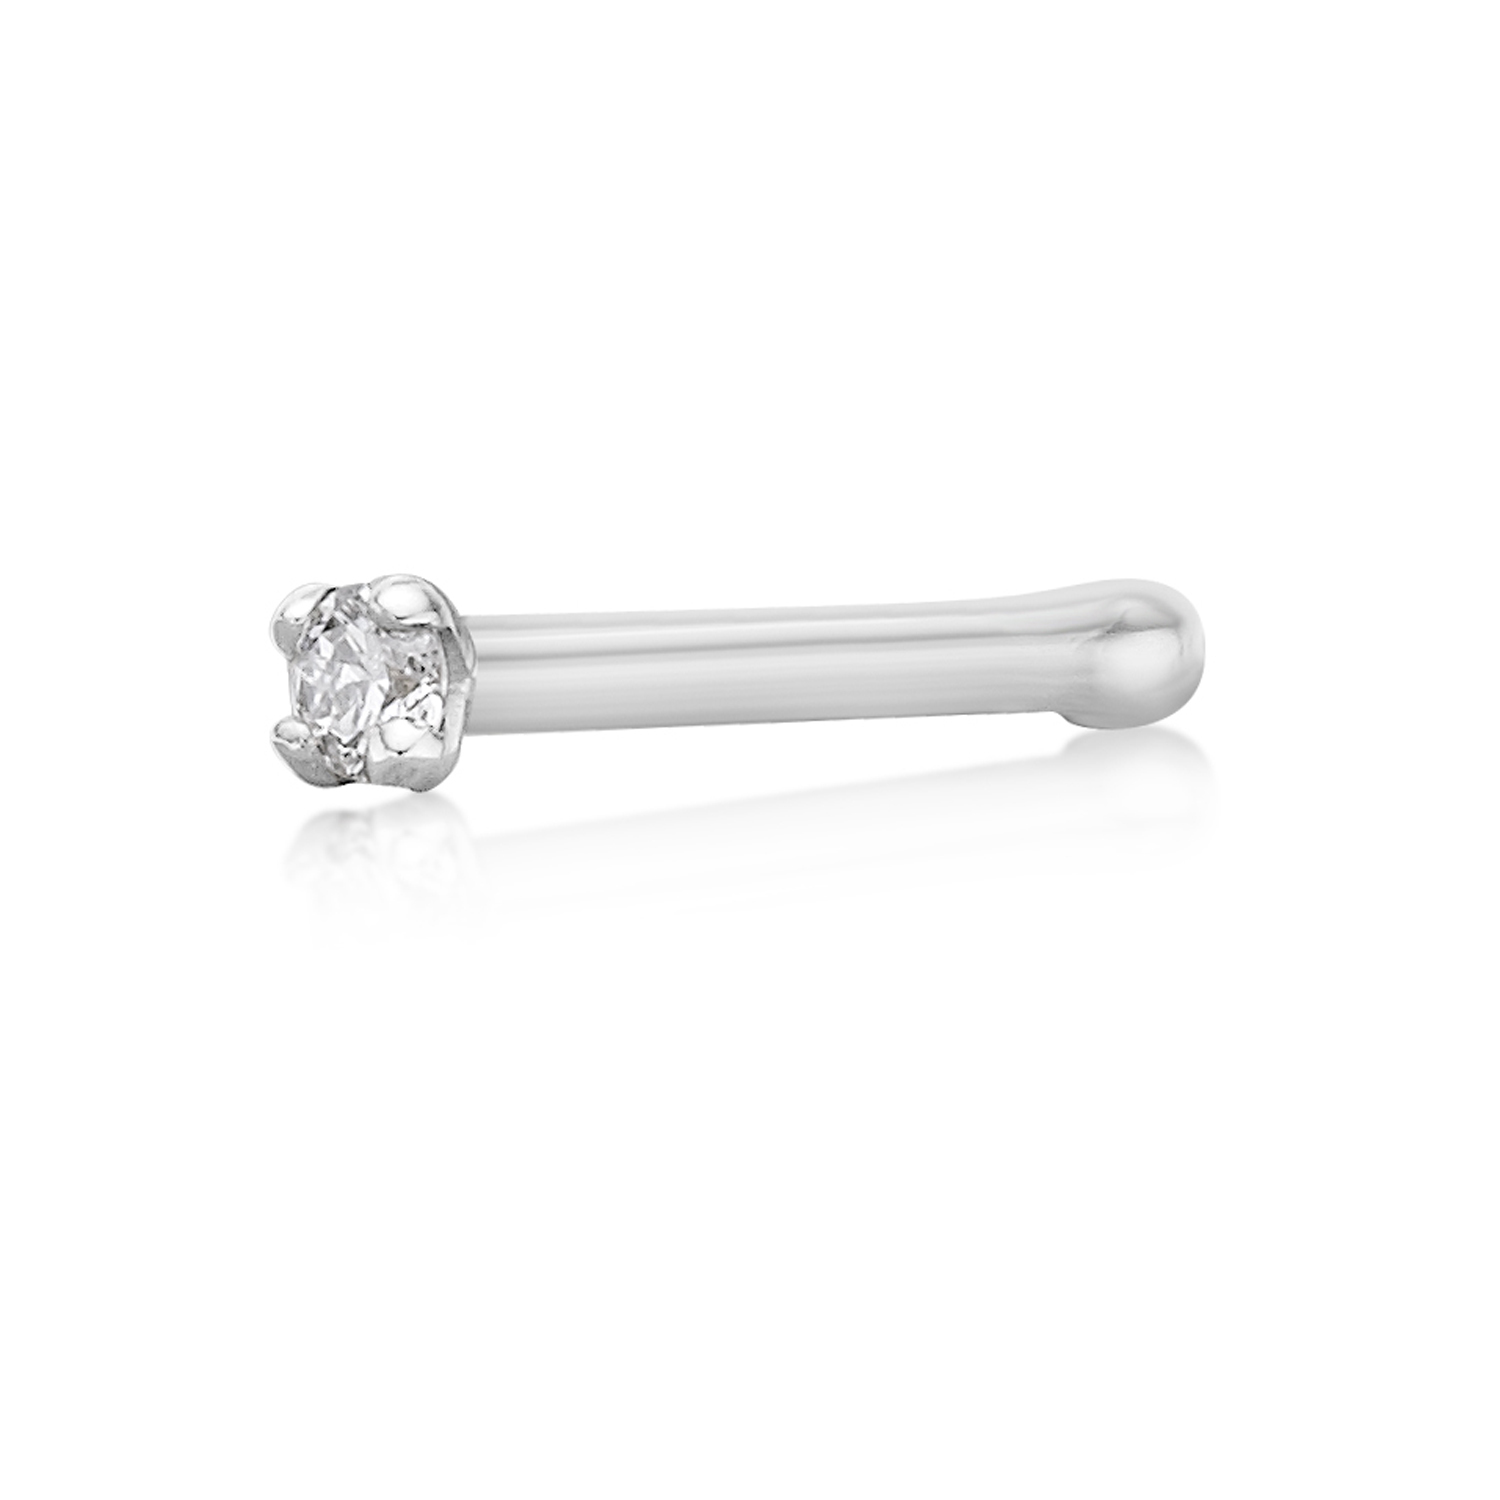 Lavari Jewelers Women's Straight Bone Nose Ring, 14K White Gold, .01 Carat Lab Grown Diamond, 20 Gauge, 1.3 MM